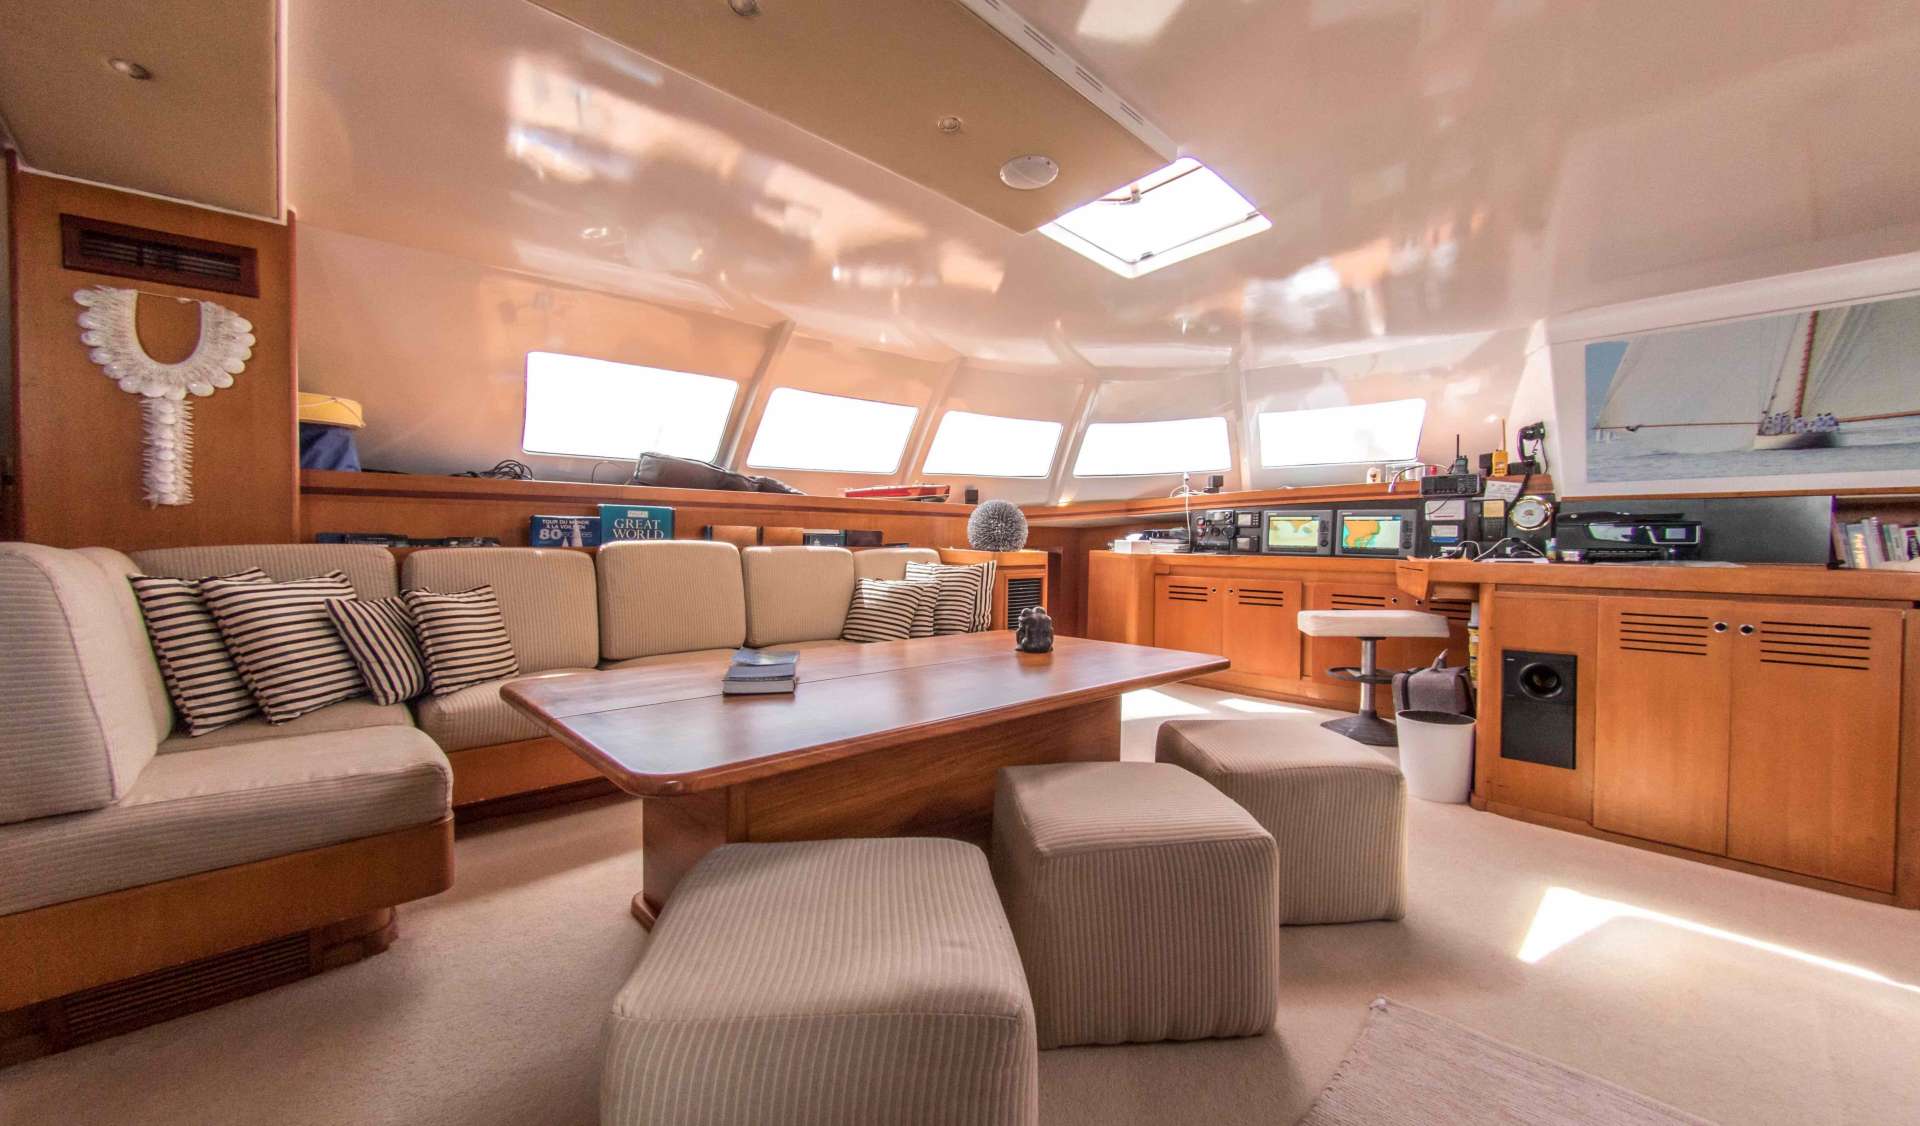 LONESTAR - Luxury yacht charter Seychelles & Boat hire in Indian Ocean & SE Asia 2